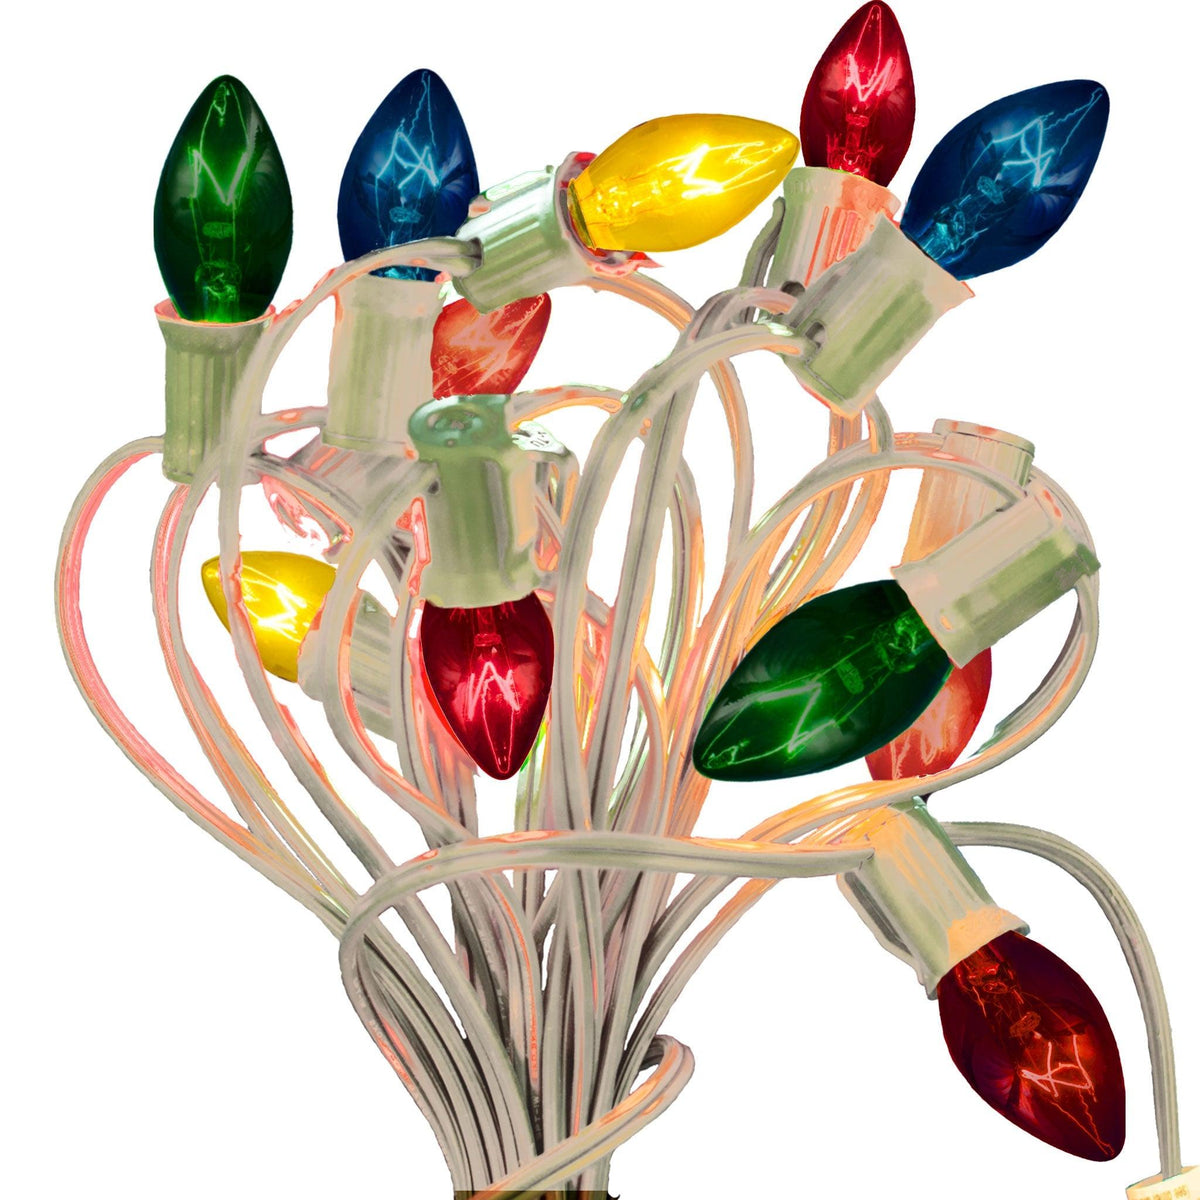 Lee Display's Classic C7/C9 Candelabra Multi-Color Christmas Light Bulbs on sale now from leedisplay.com